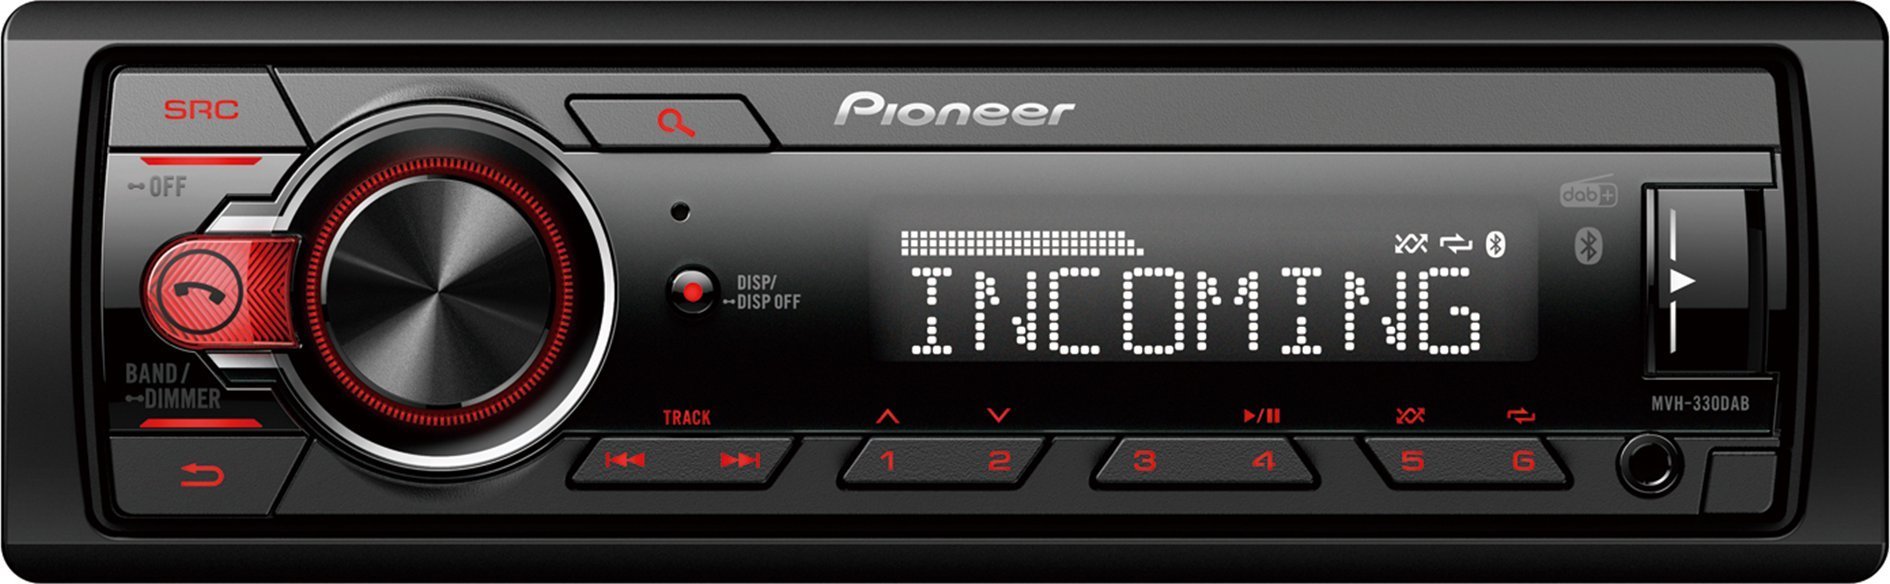 Radio, CD, DVD player auto - Radio auto Pioneer Pioneer MVH-330DABAN cu antenă DAB